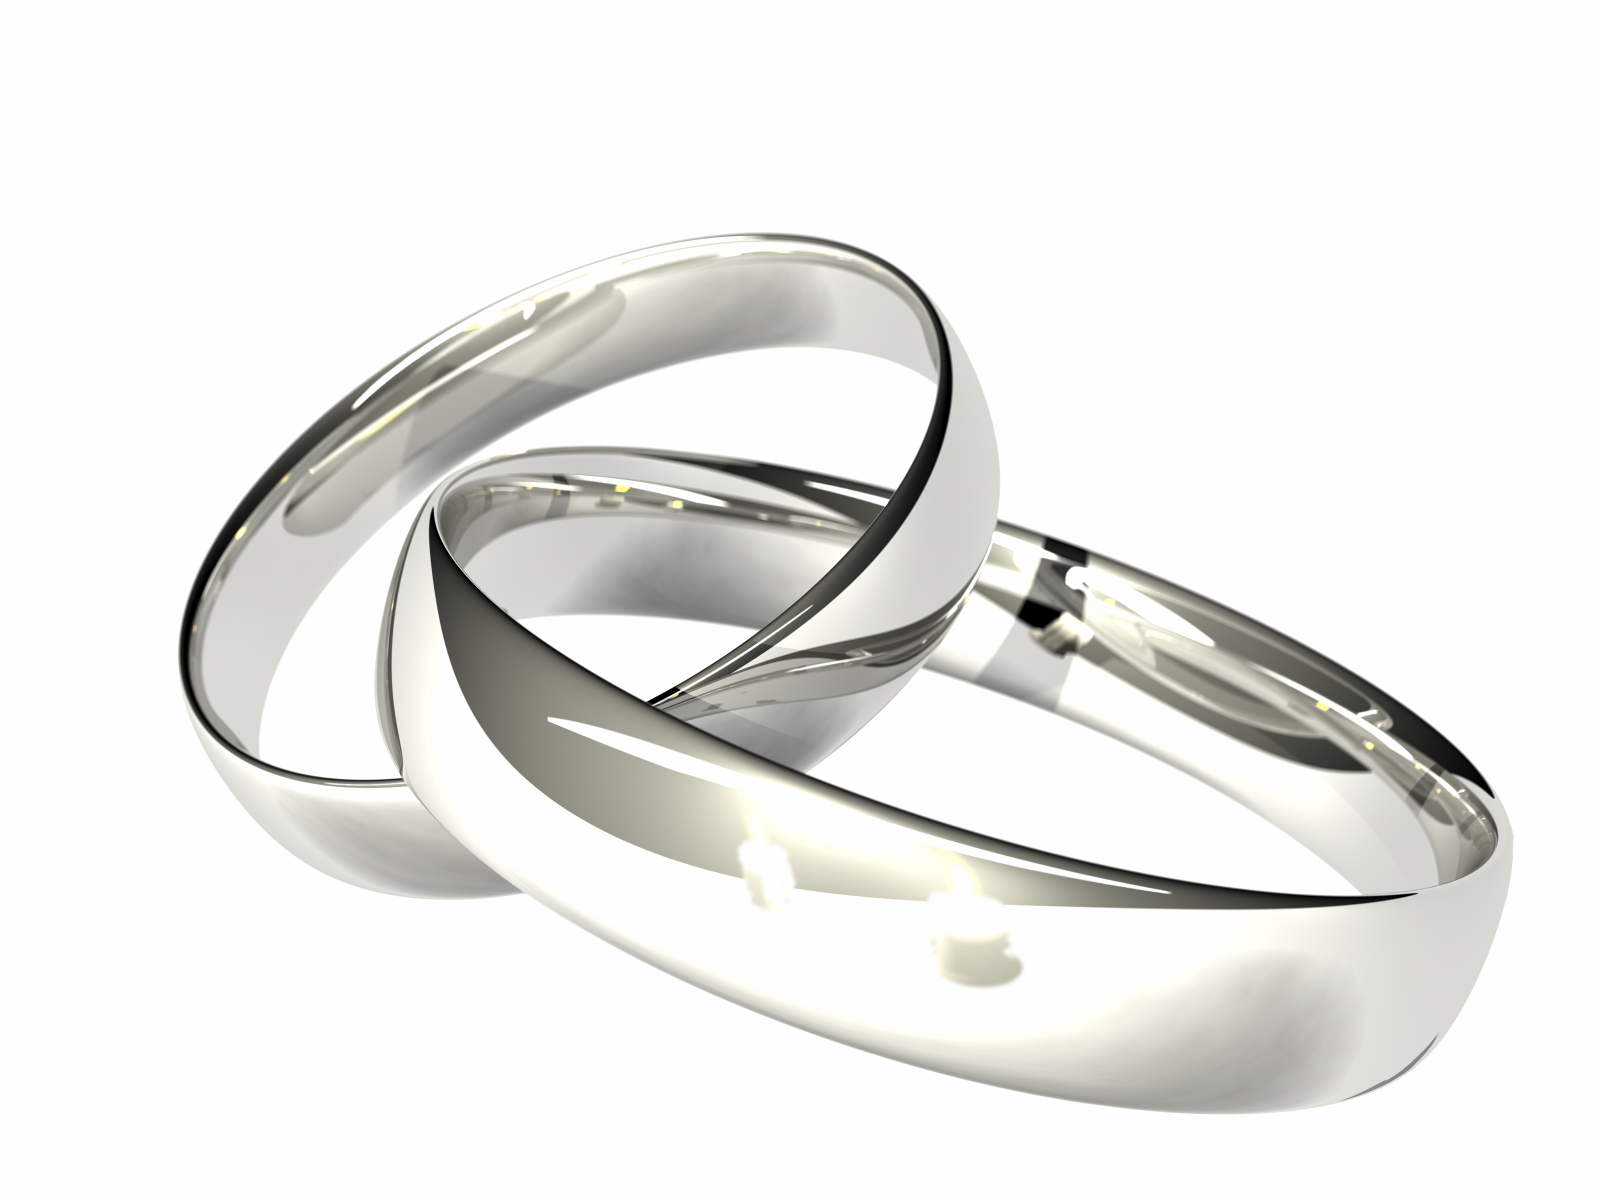 Bridal bliss bridal show, wedding ring designers list